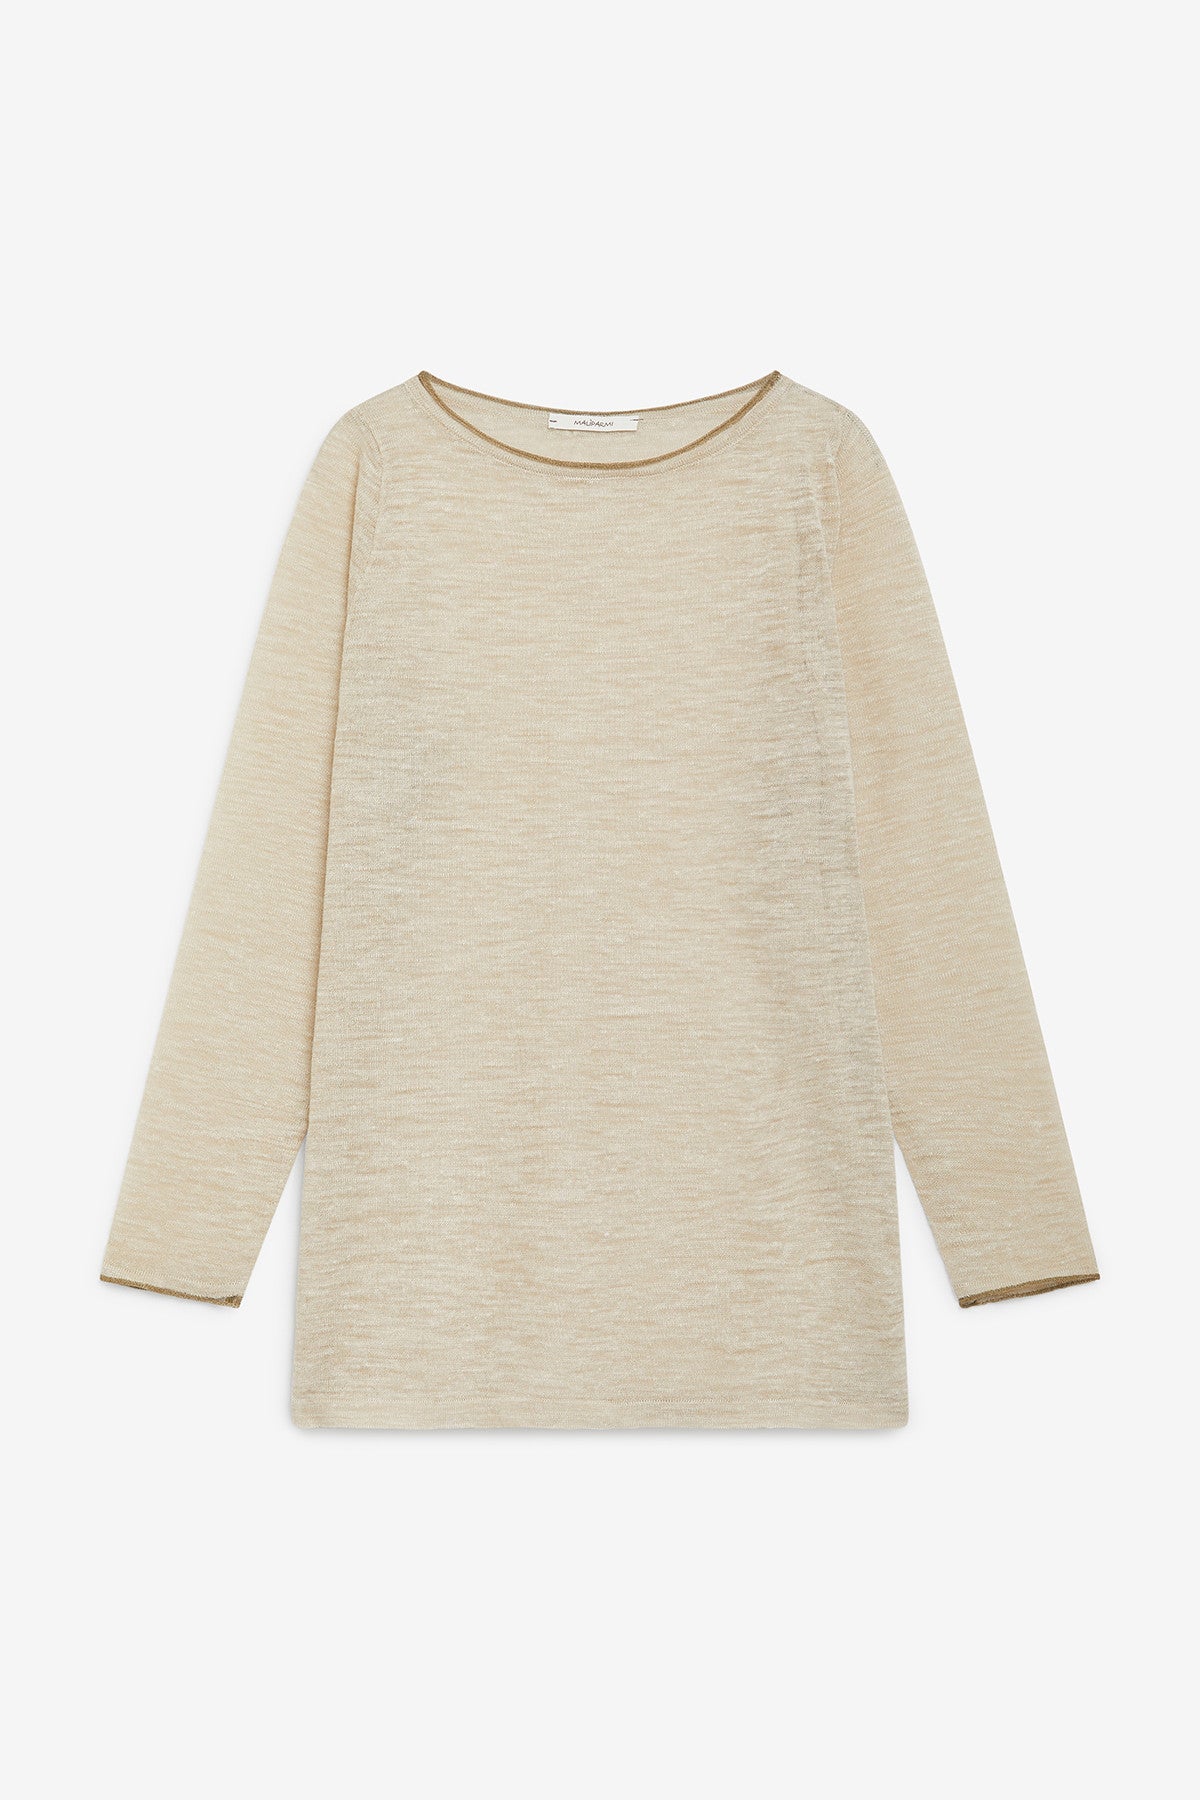 dove grey linen sweater